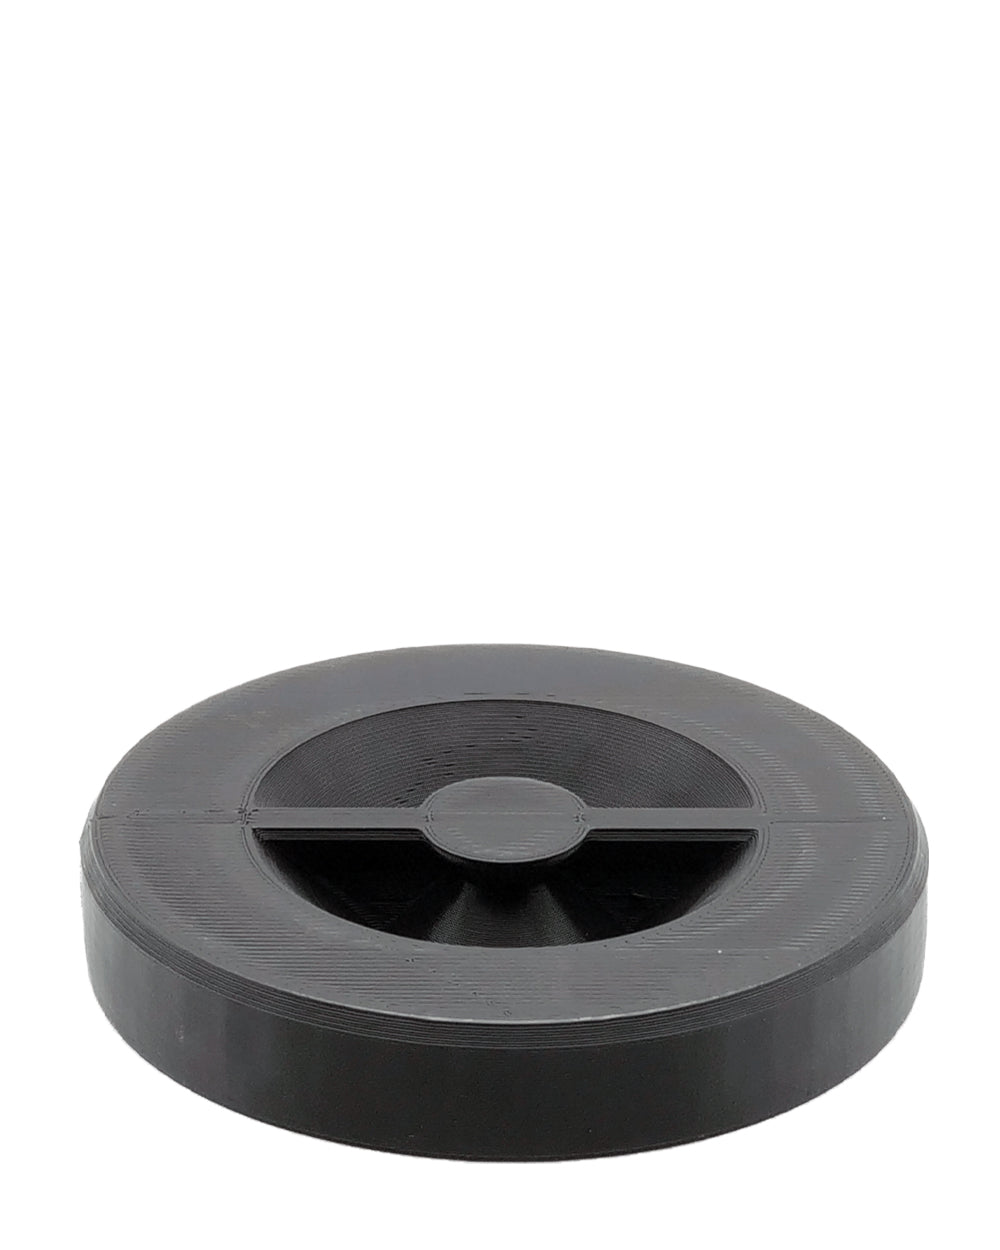 HUMBOLDT | Black Pre-Rolled Cones Filling Machine Starter Kit 84mm | Fill 55 Cones Per Run - 4